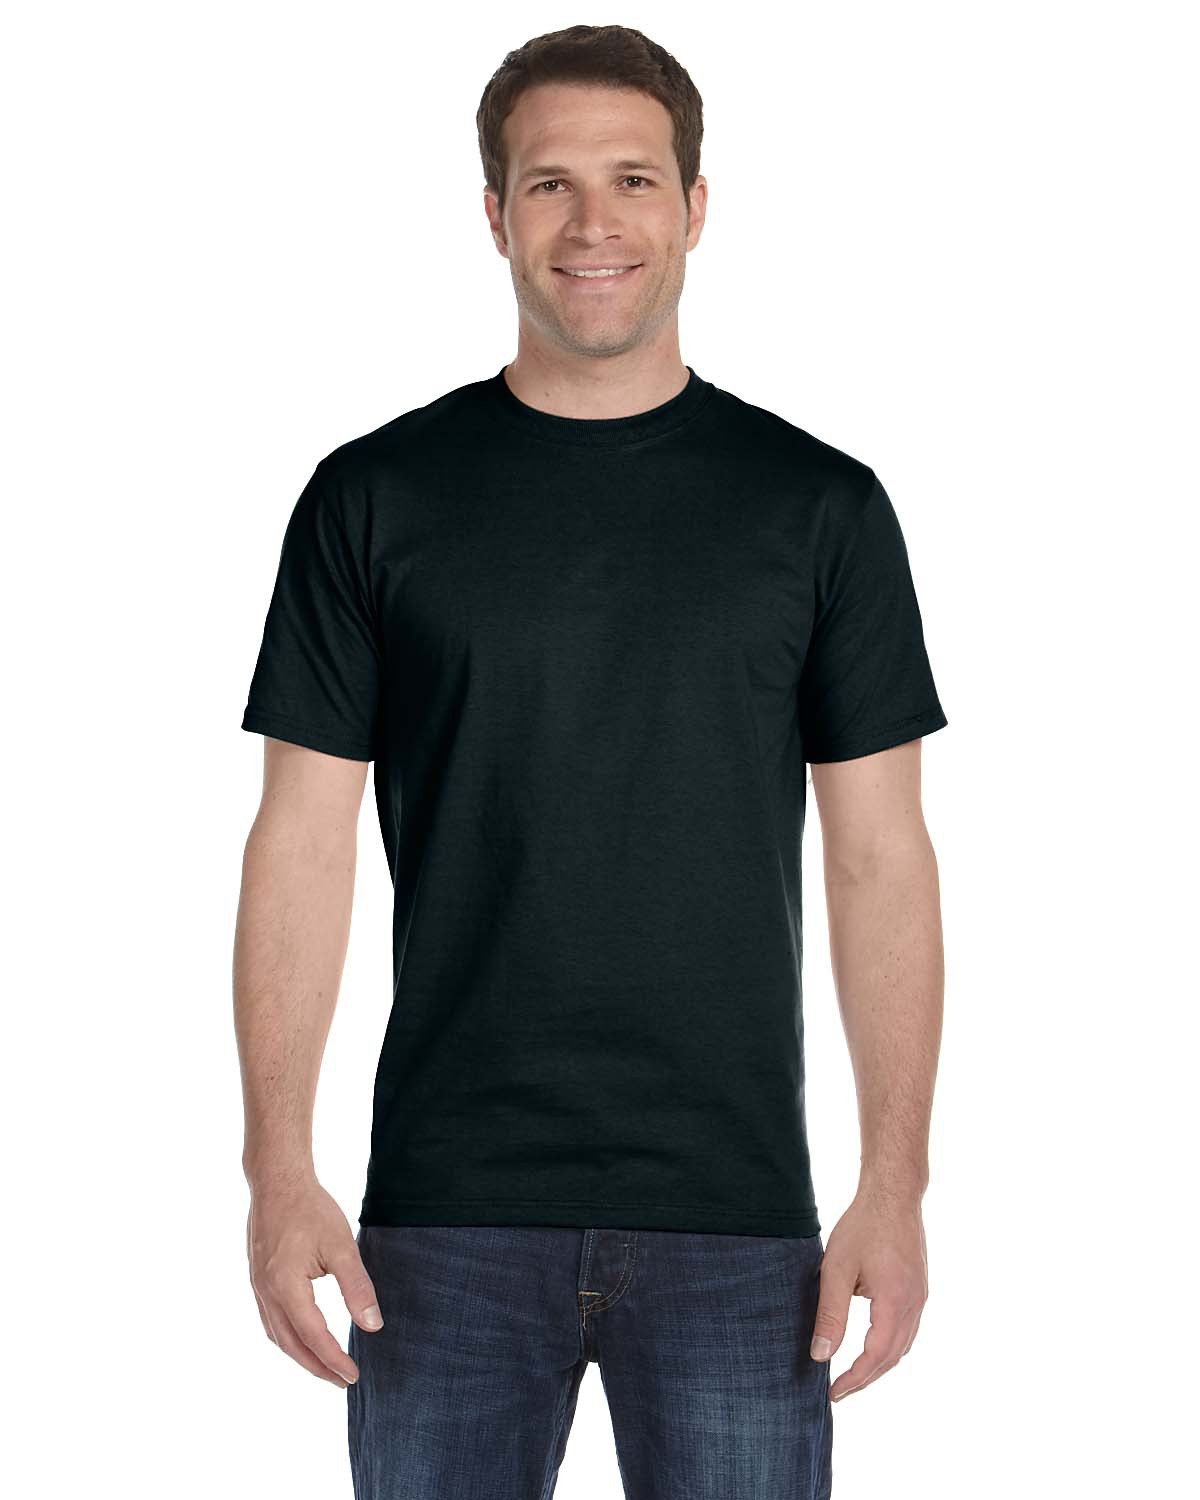 Hanes Perfect-T Tear-Away T-Shirt 100% Cotton Black or White, S, M, L, XL